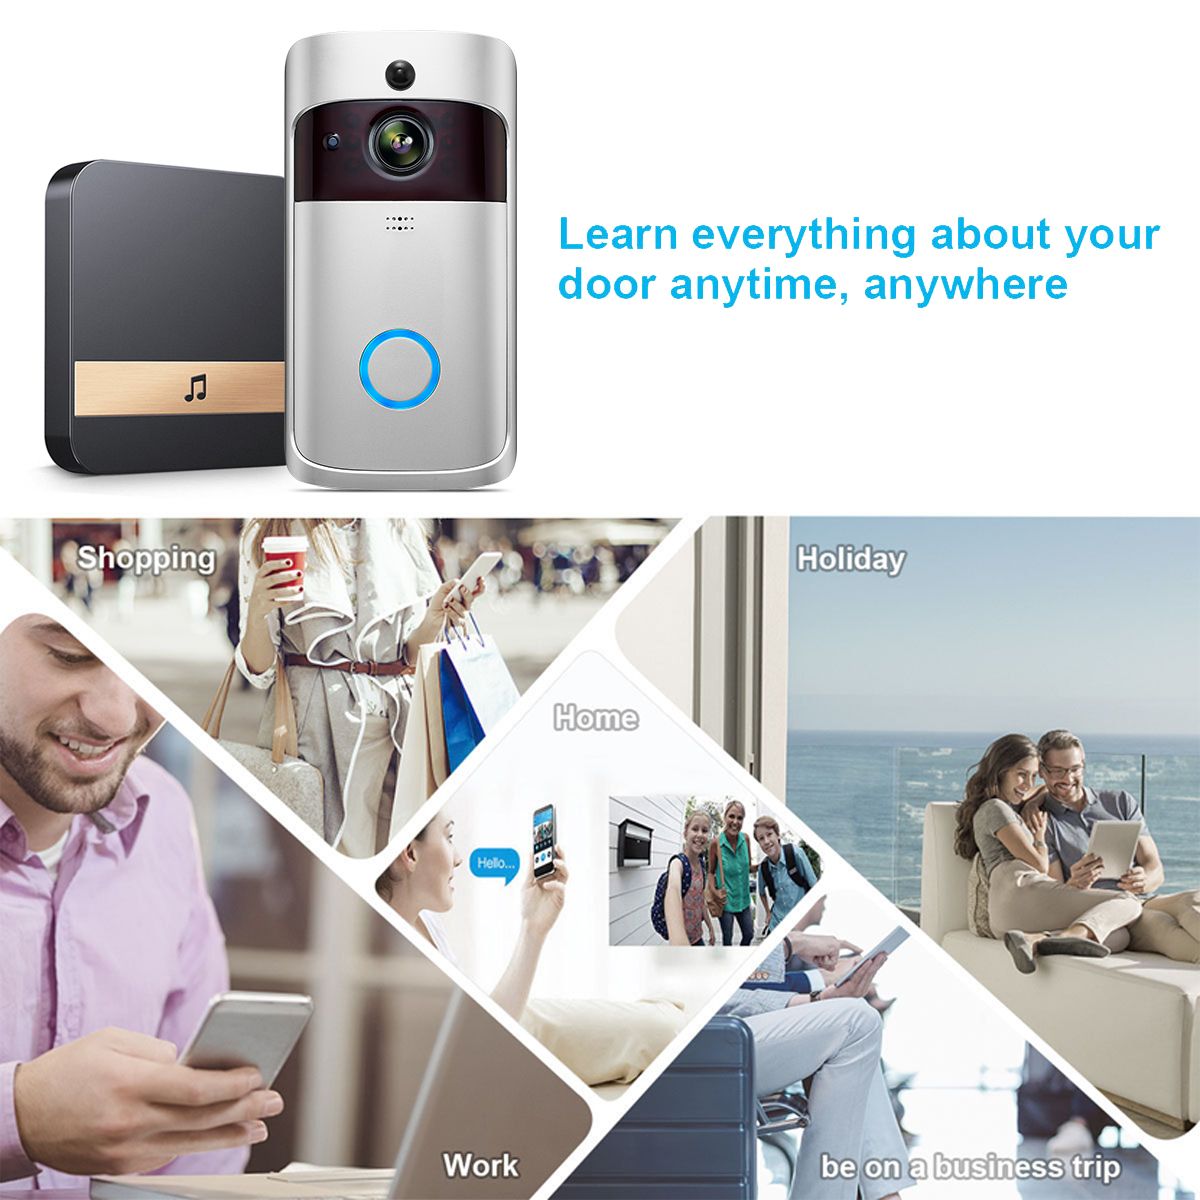 Real-Time-Wireless-Smart-Doorbell-WiFi-Phone-Camera-Video-Talks-PIR-Motion-Hot-Doorbell-1737065